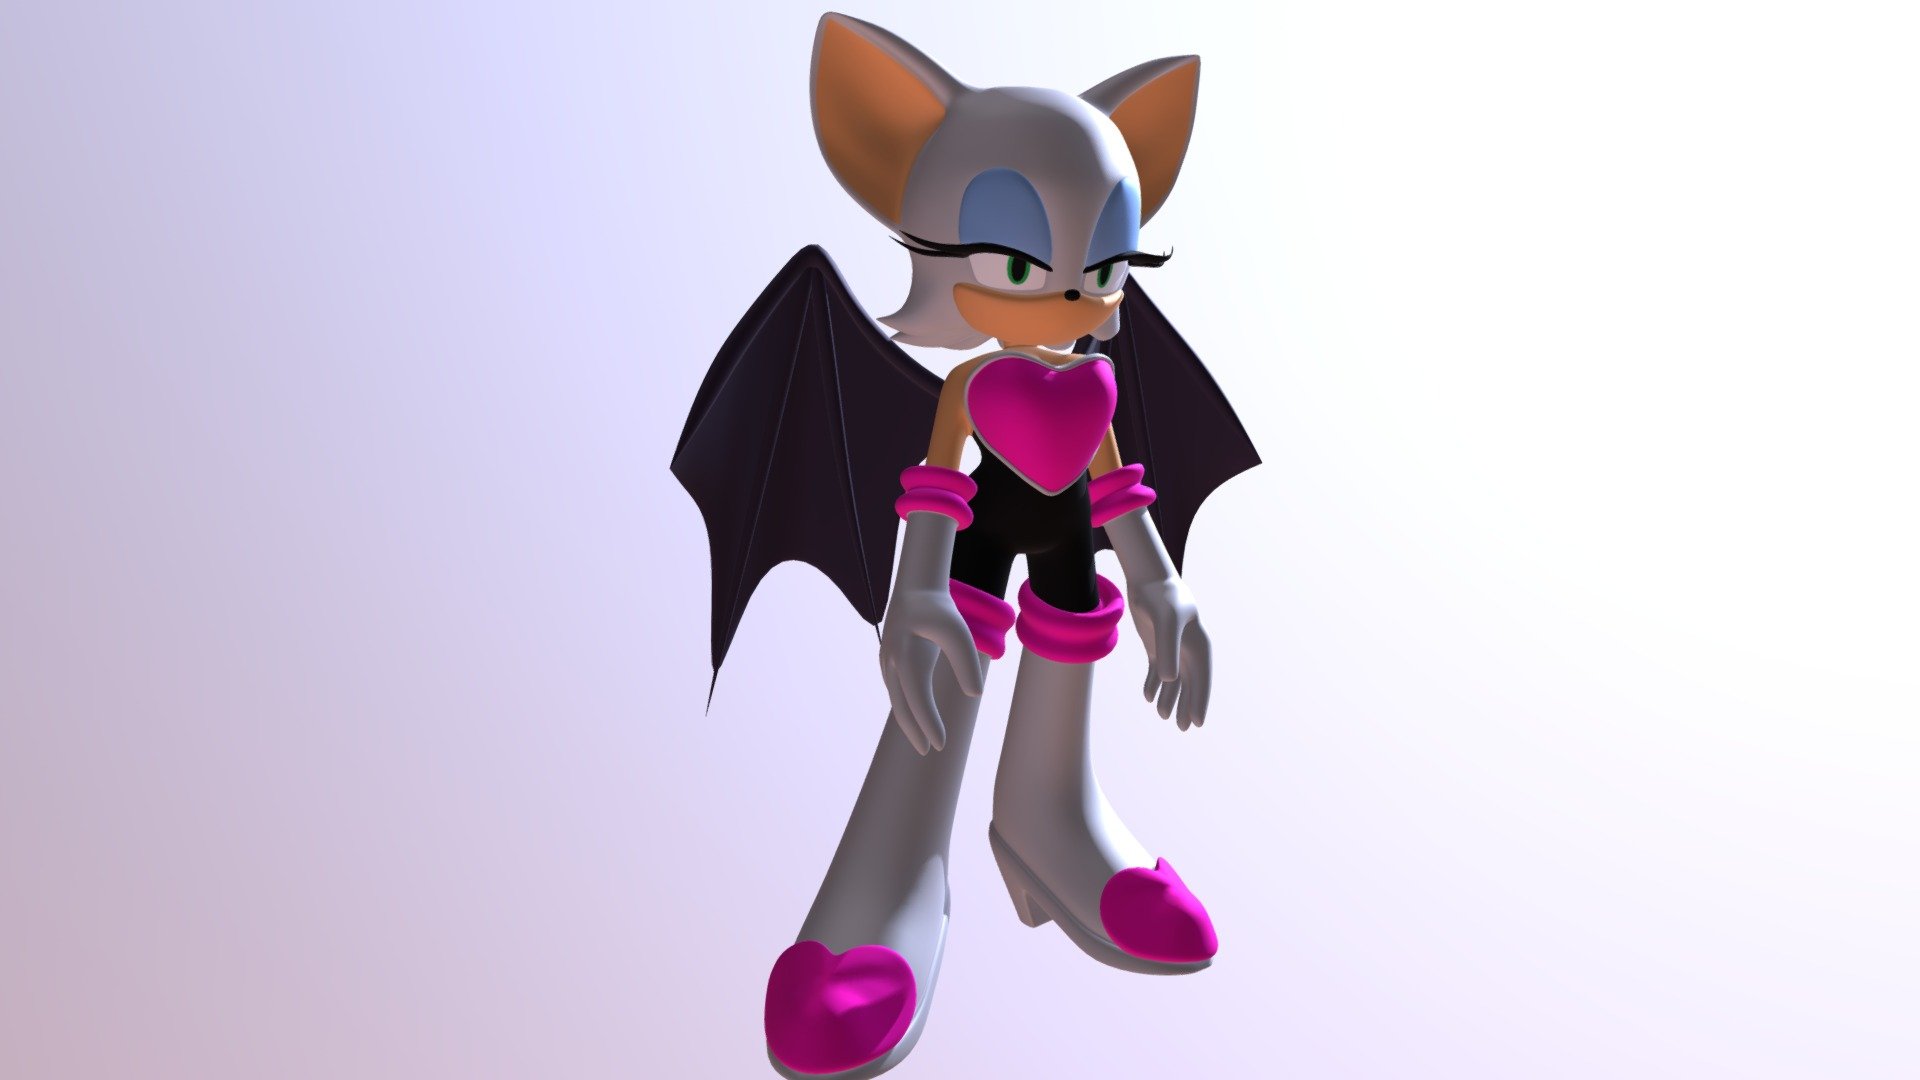 Rouge the bat model